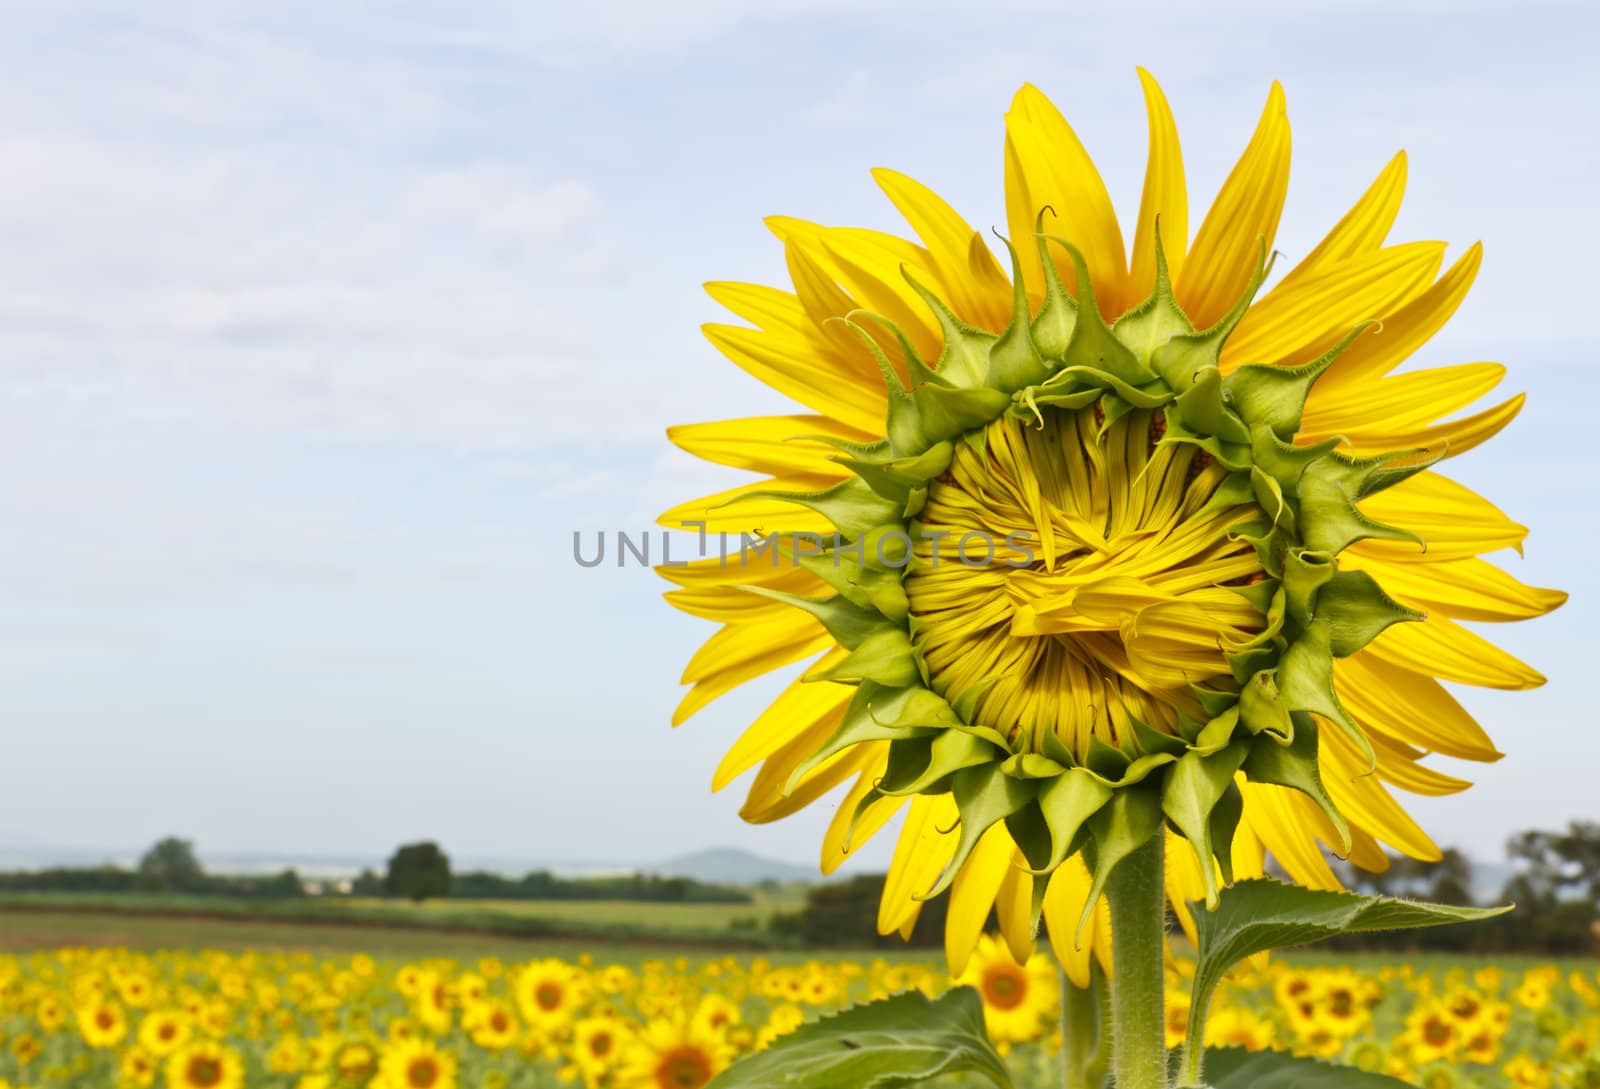 Sunflower and blue sky